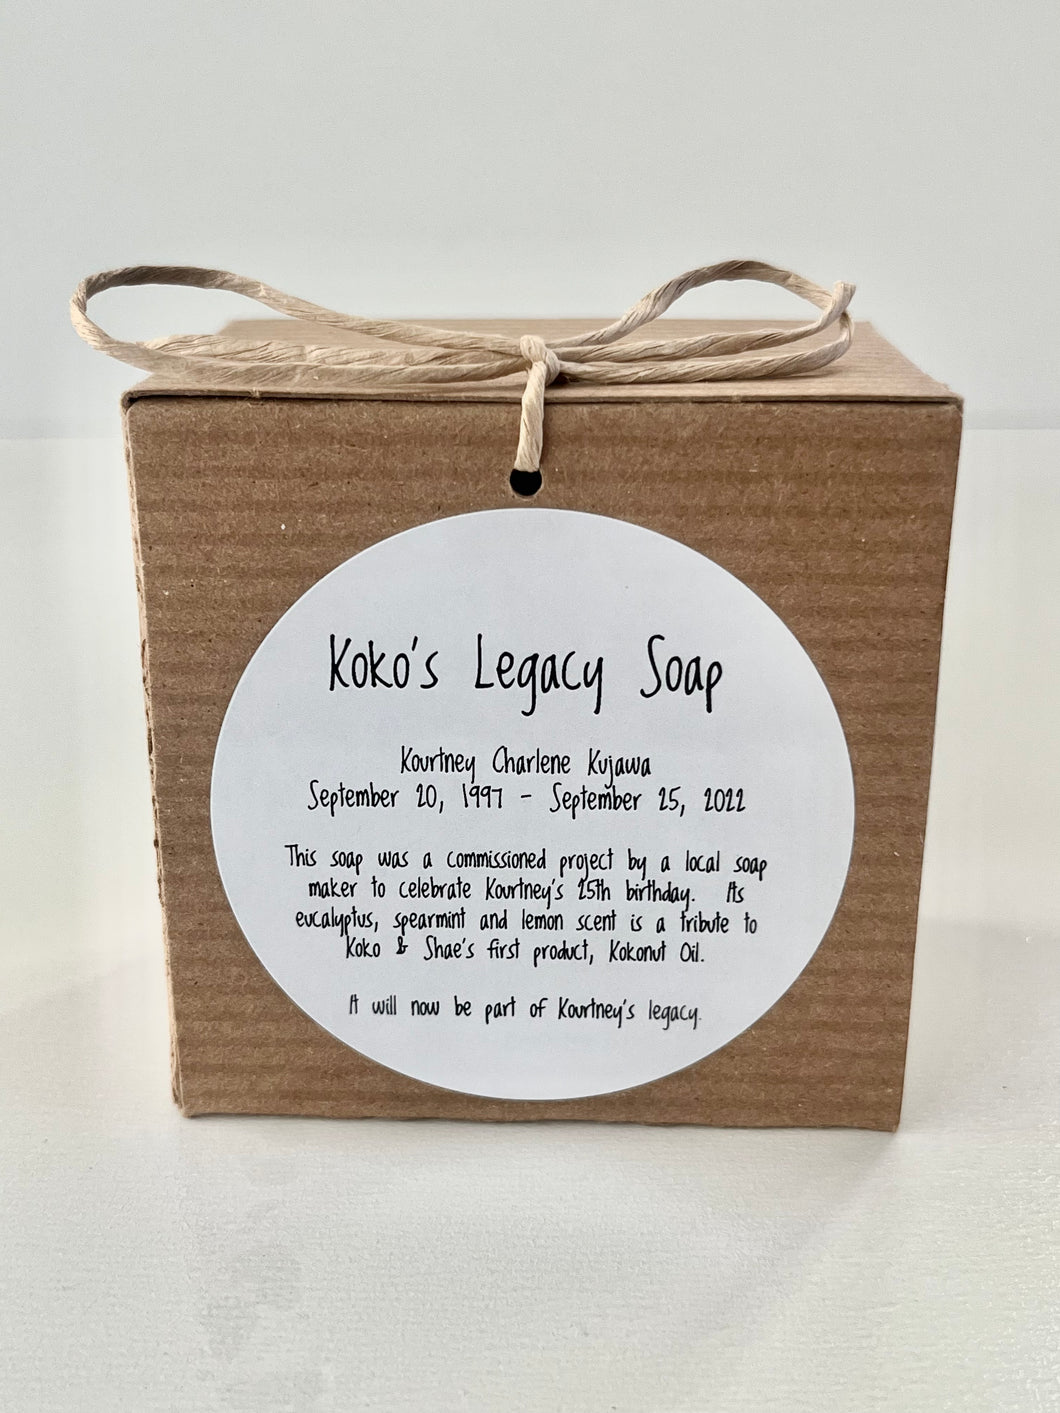 Koko's Legacy Soap